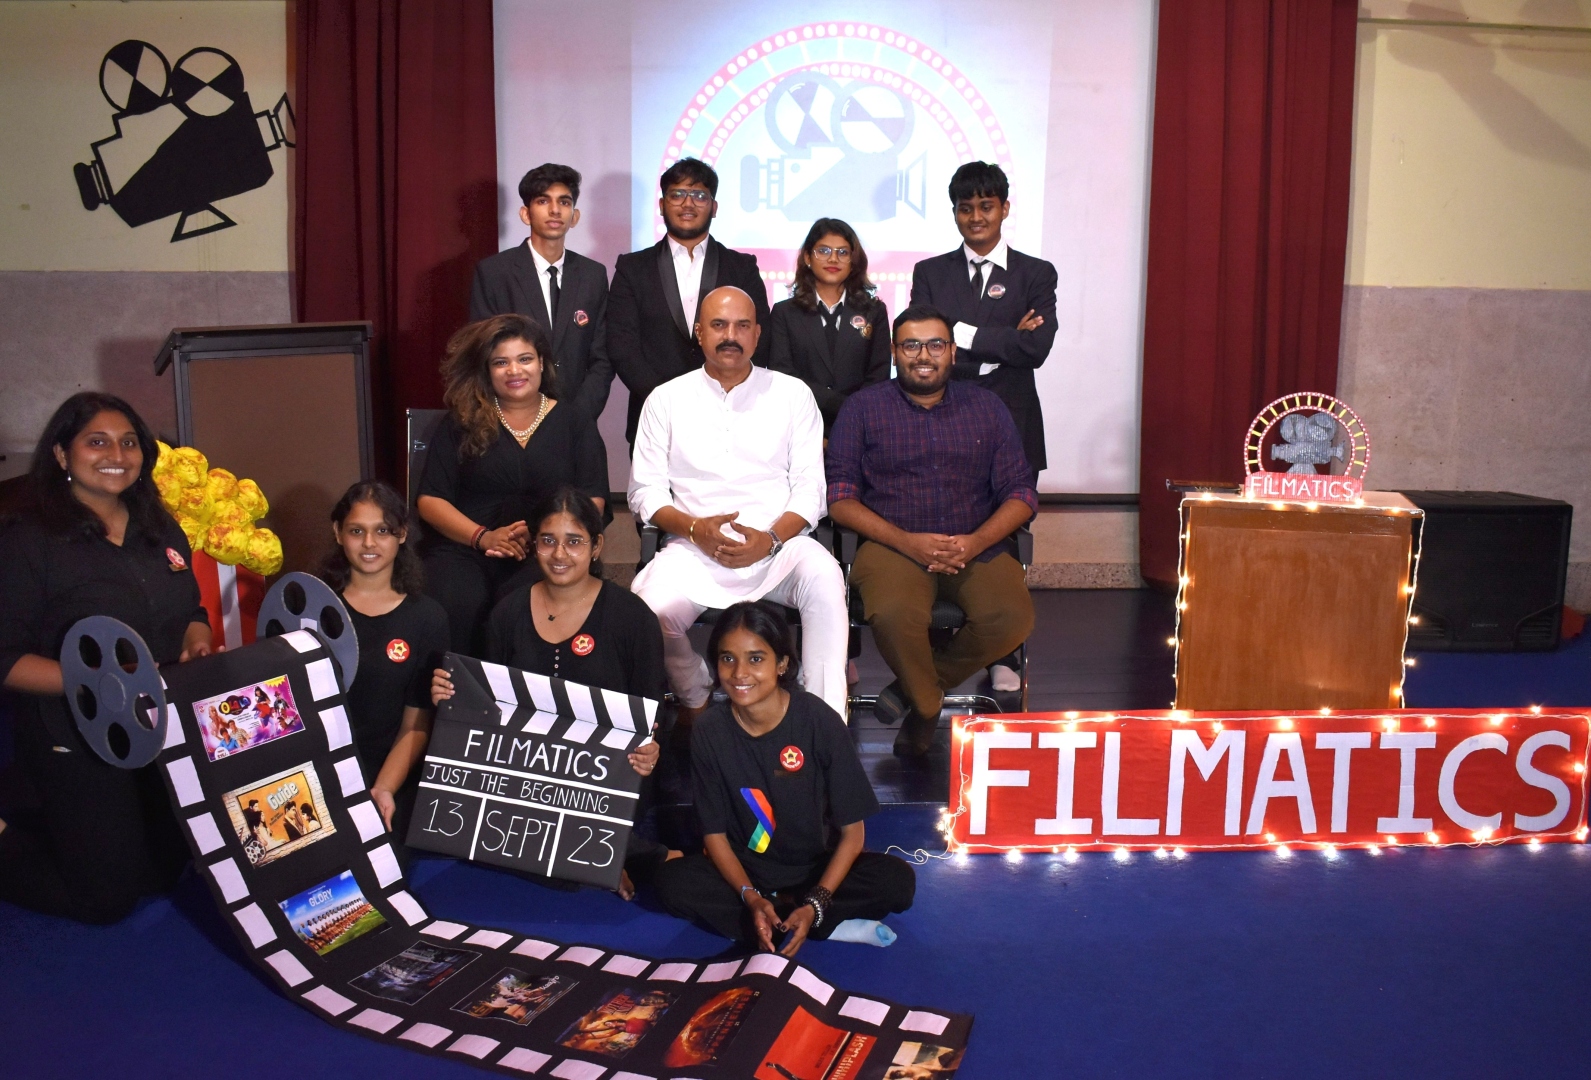 ﻿Film club ‘Filmatics’ launched at Don Bosco College